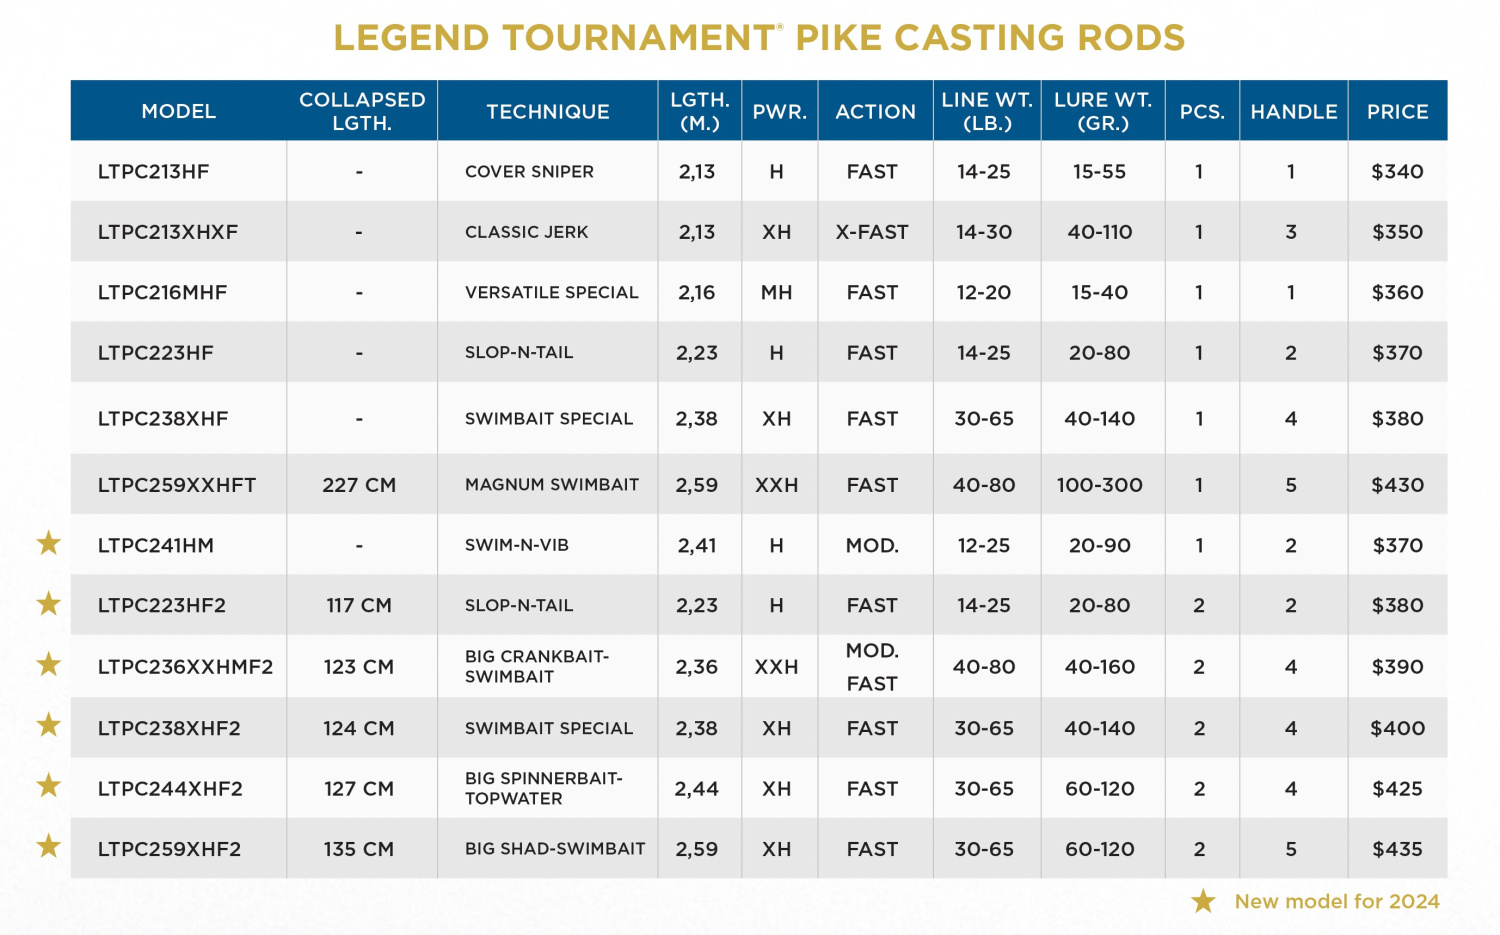 St. Croix Legend Tournament Pike Casting